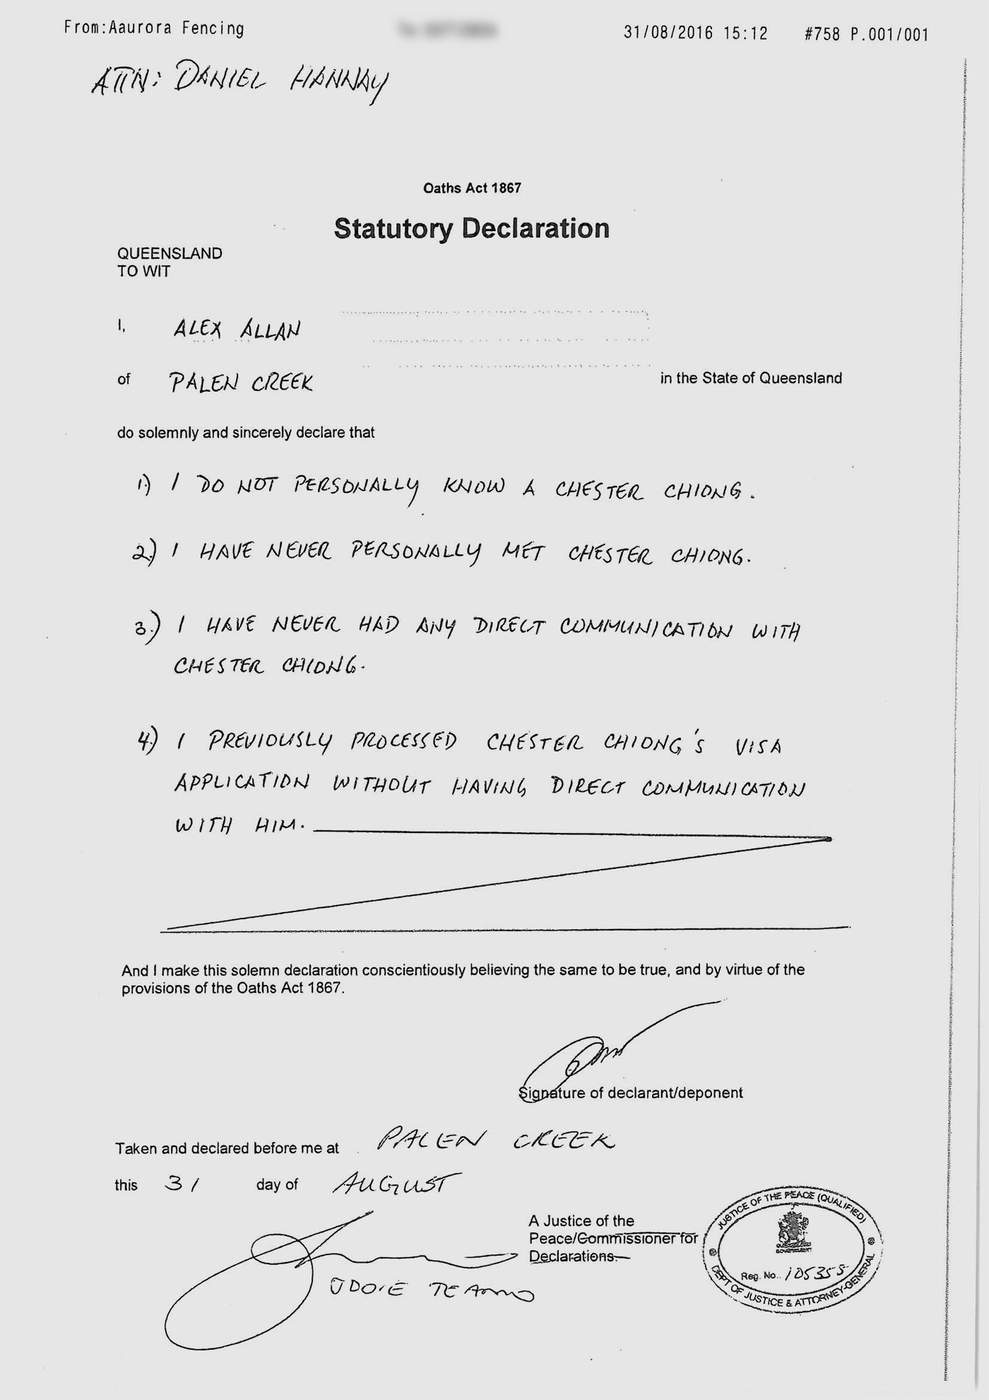 Read Alex Allan's statutory declaration.